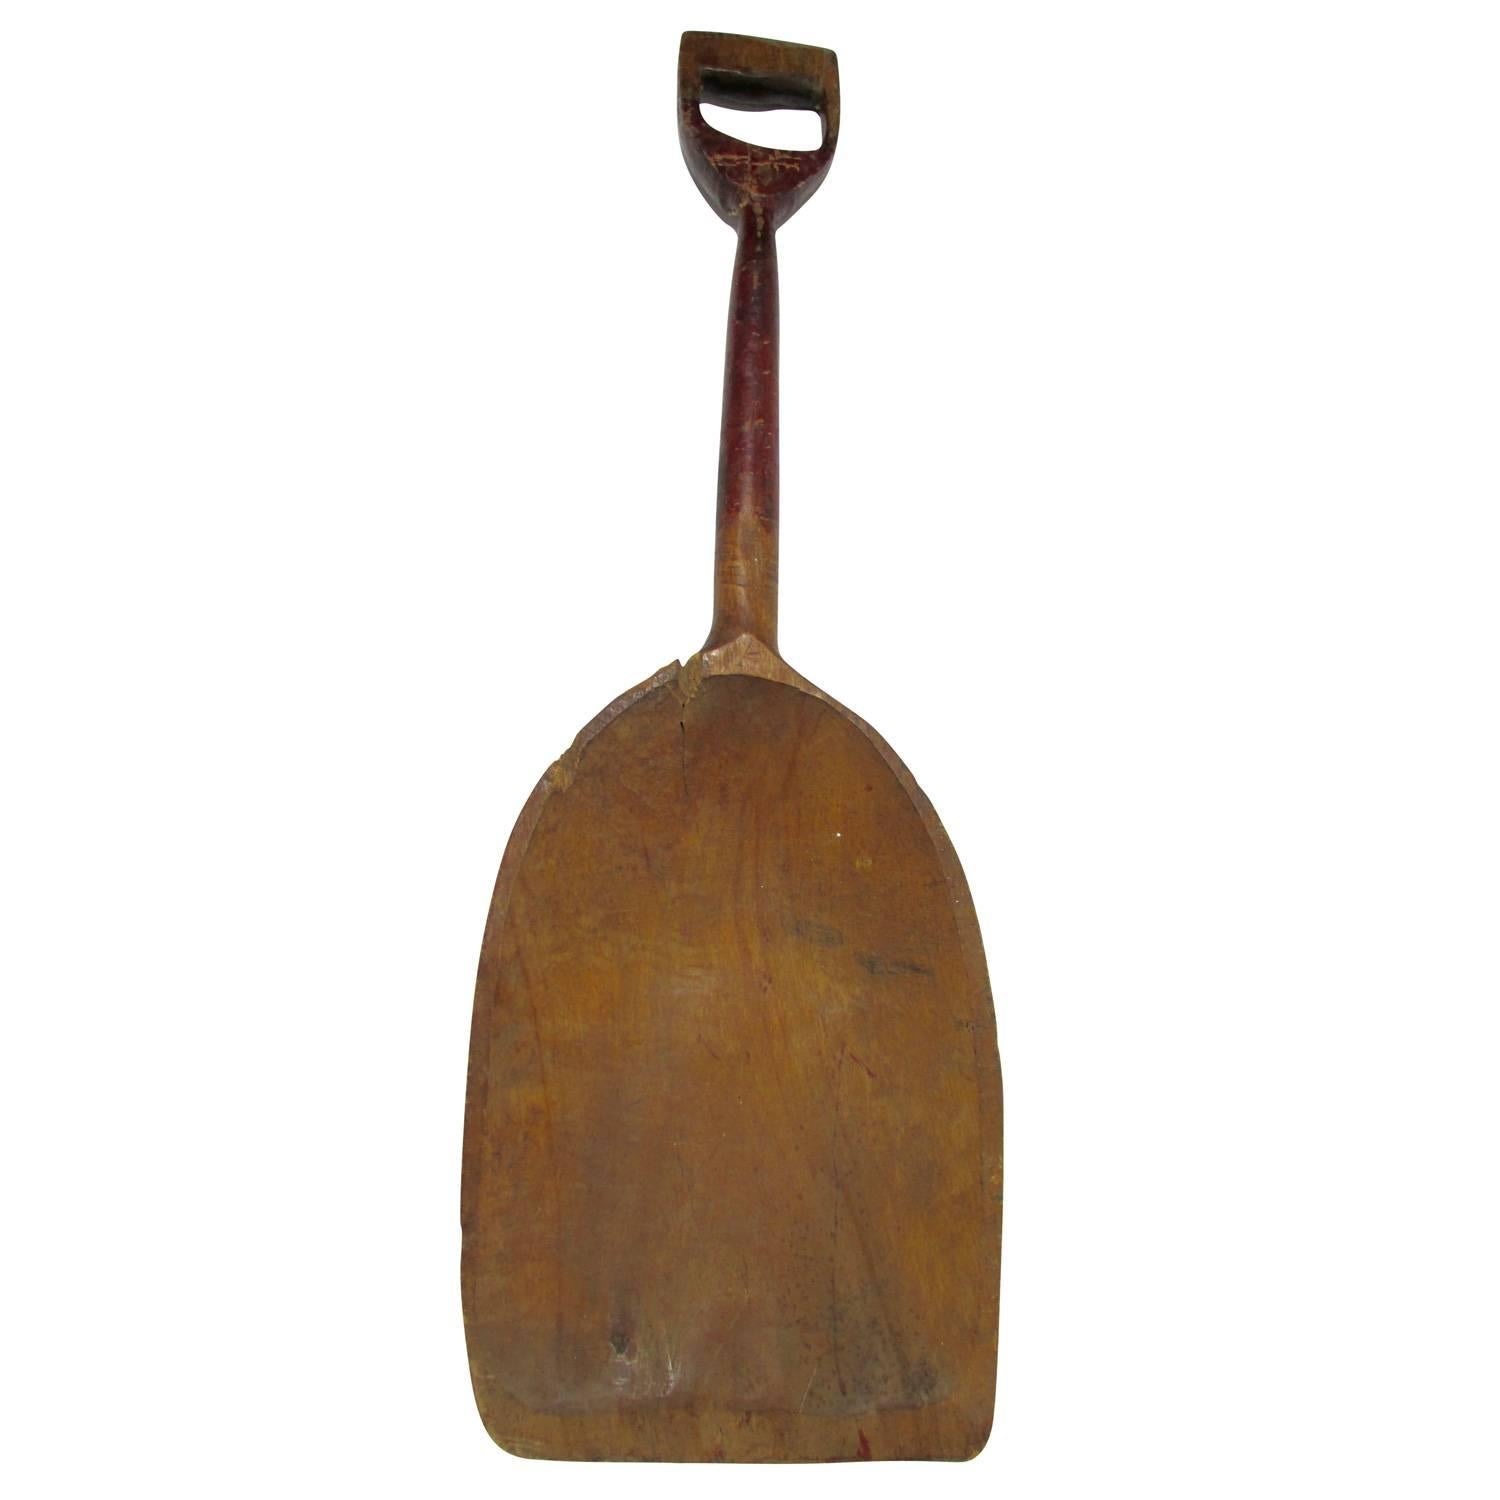 Early Hand-Carved Folk Art Shovel For Sale